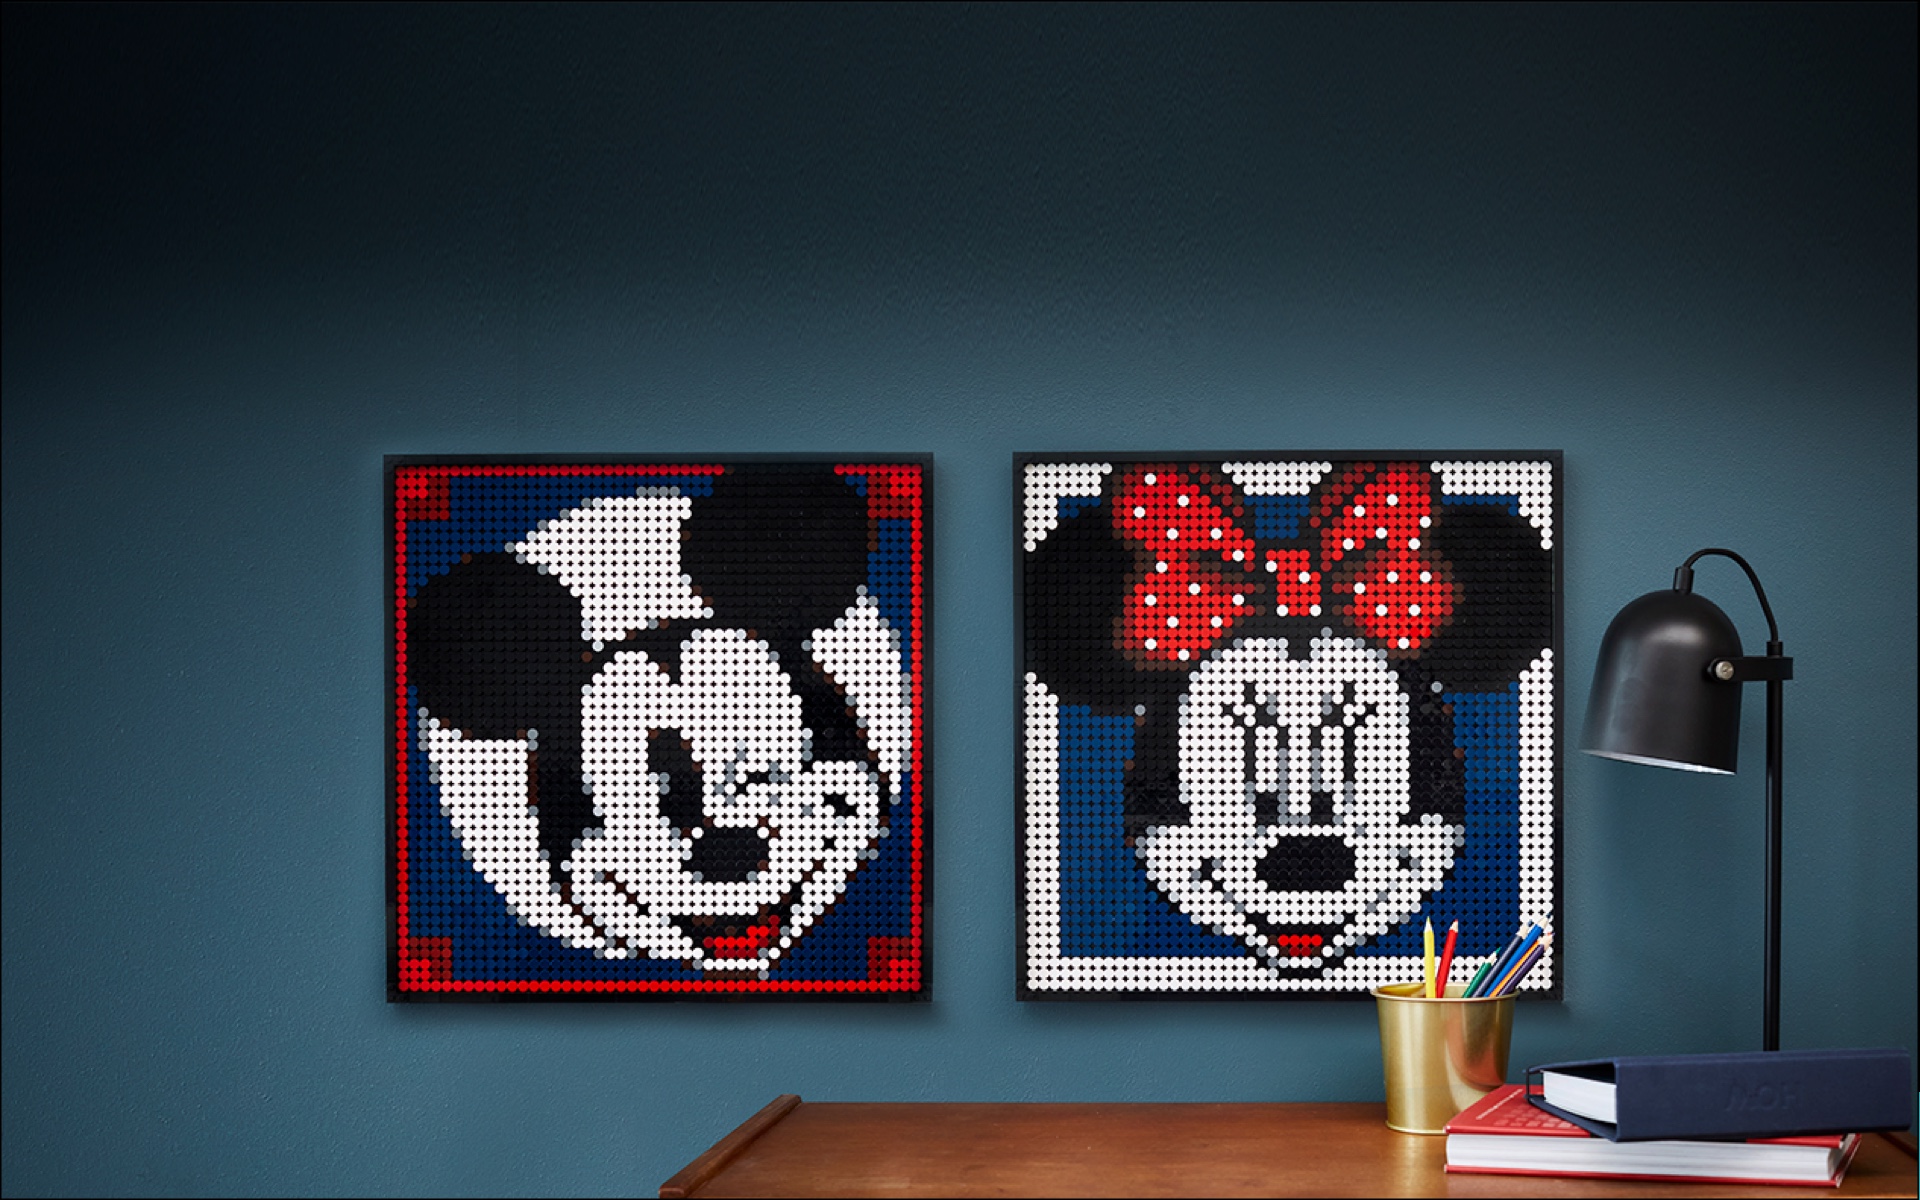 I made a Galaxy Themed Mickey Mouse Wallpaper, Enjoy! : r/disney